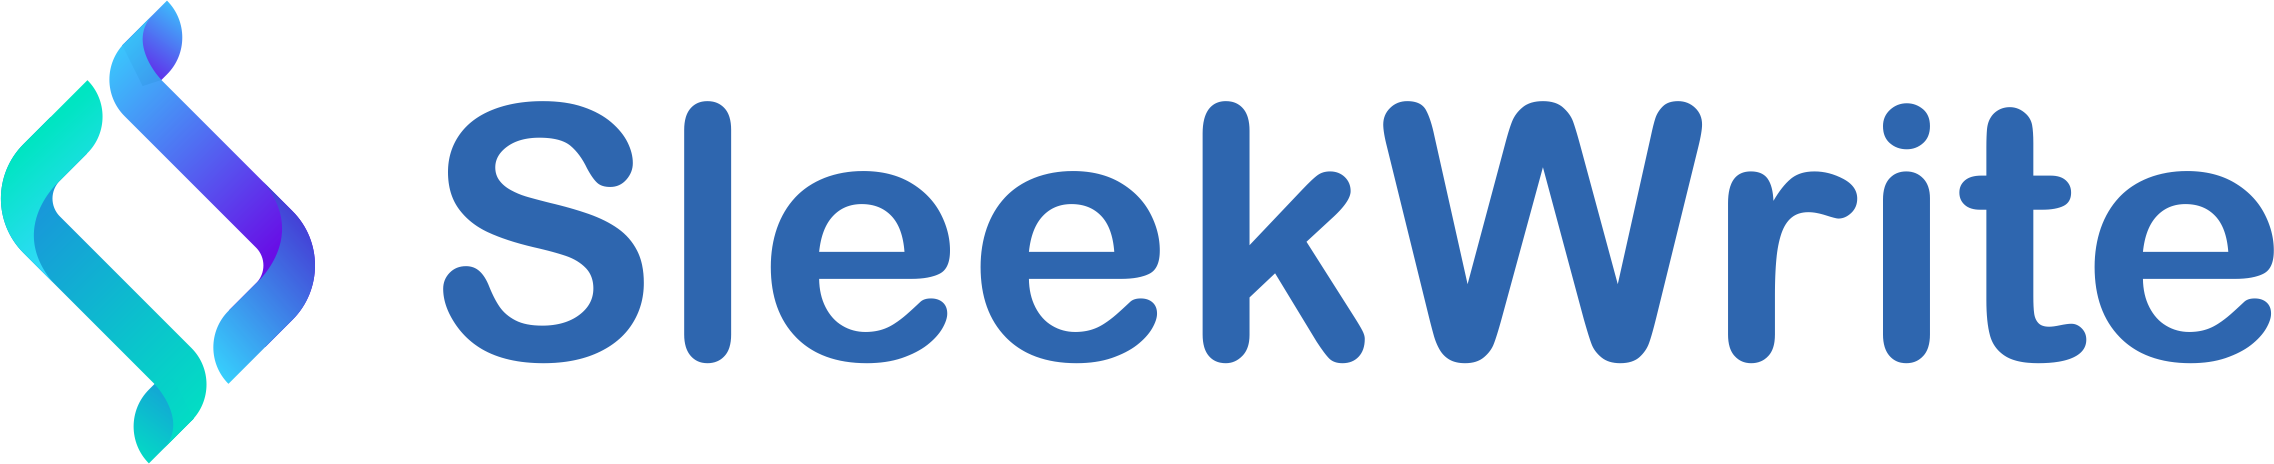 sleekwrite-logo.png